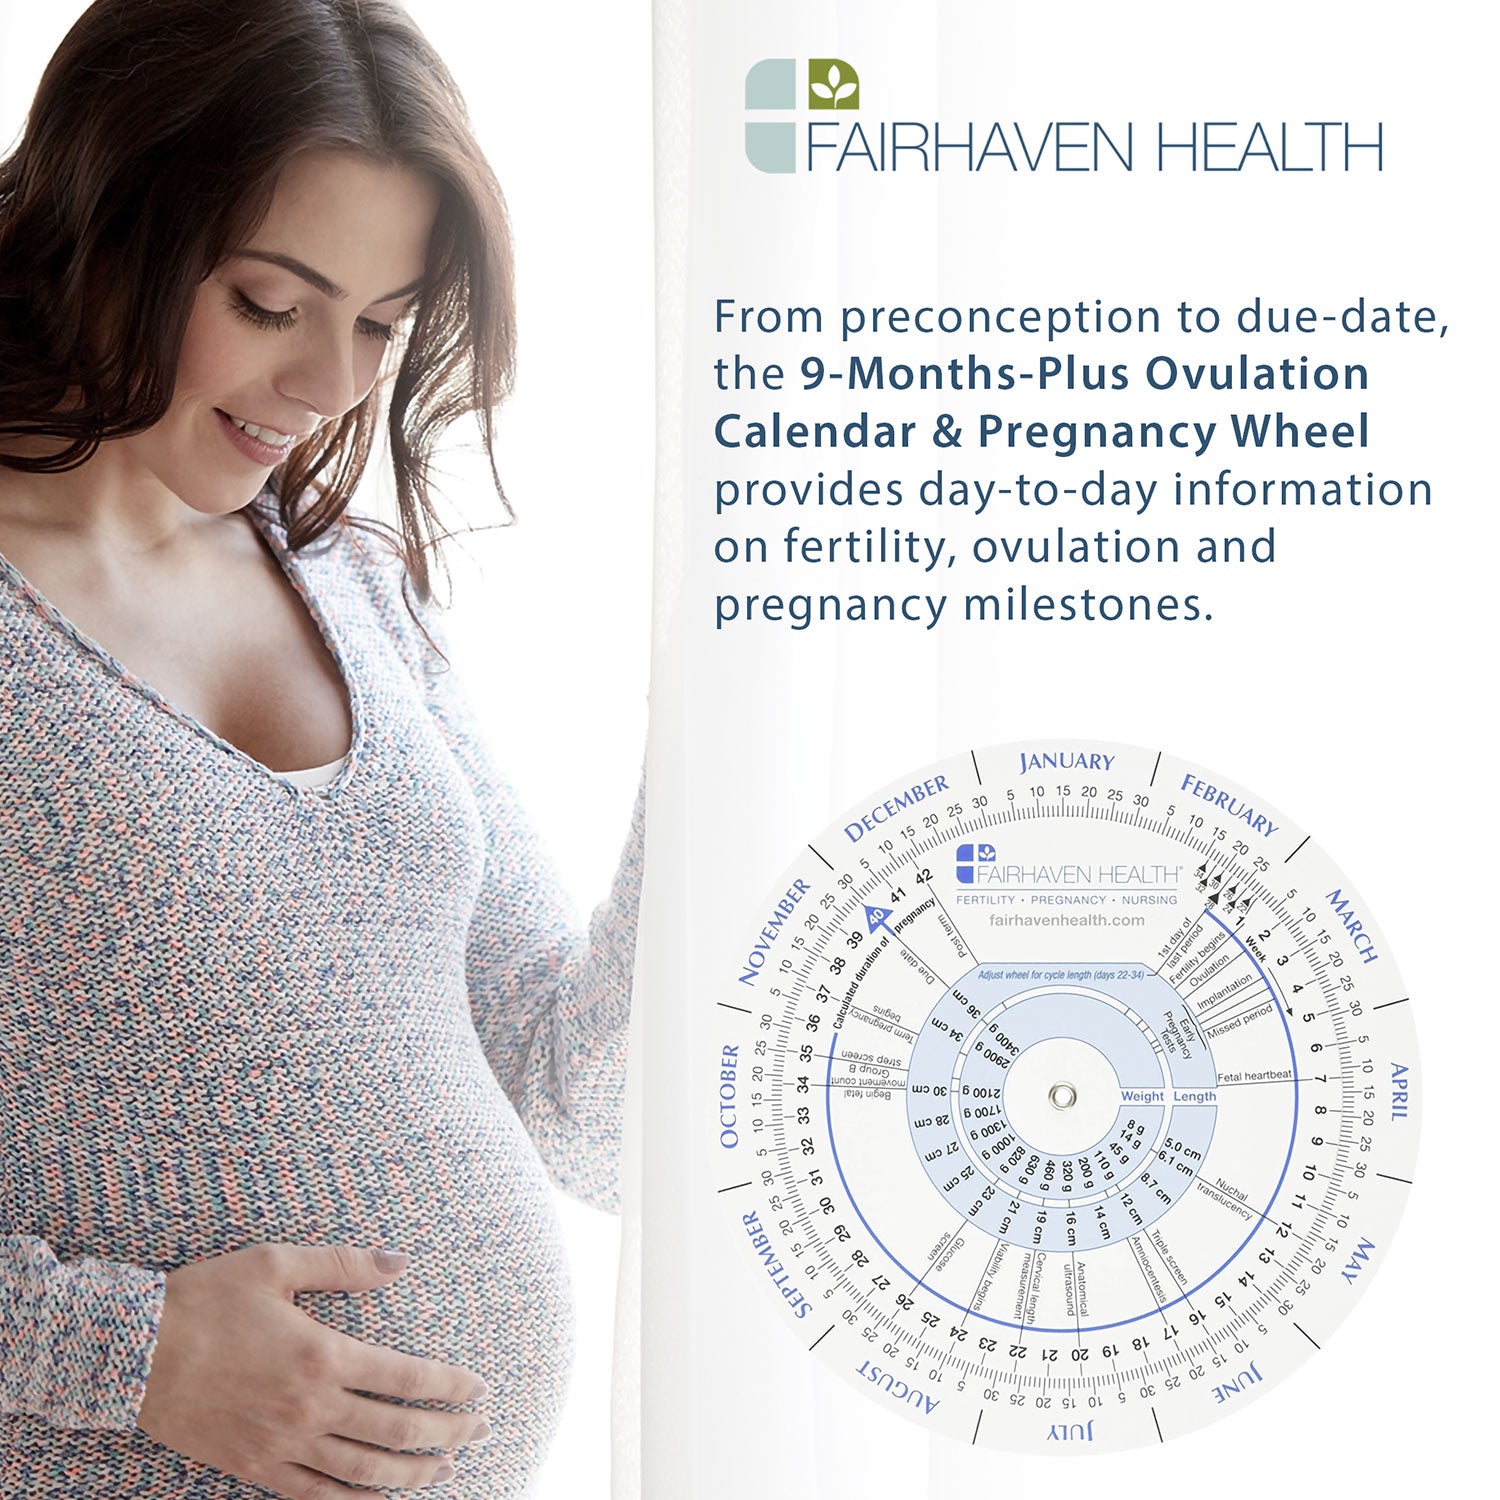 Ovulation Calendar & Pregnancy Wheel provides info on fertility, ovulation, pregnancy, milestones